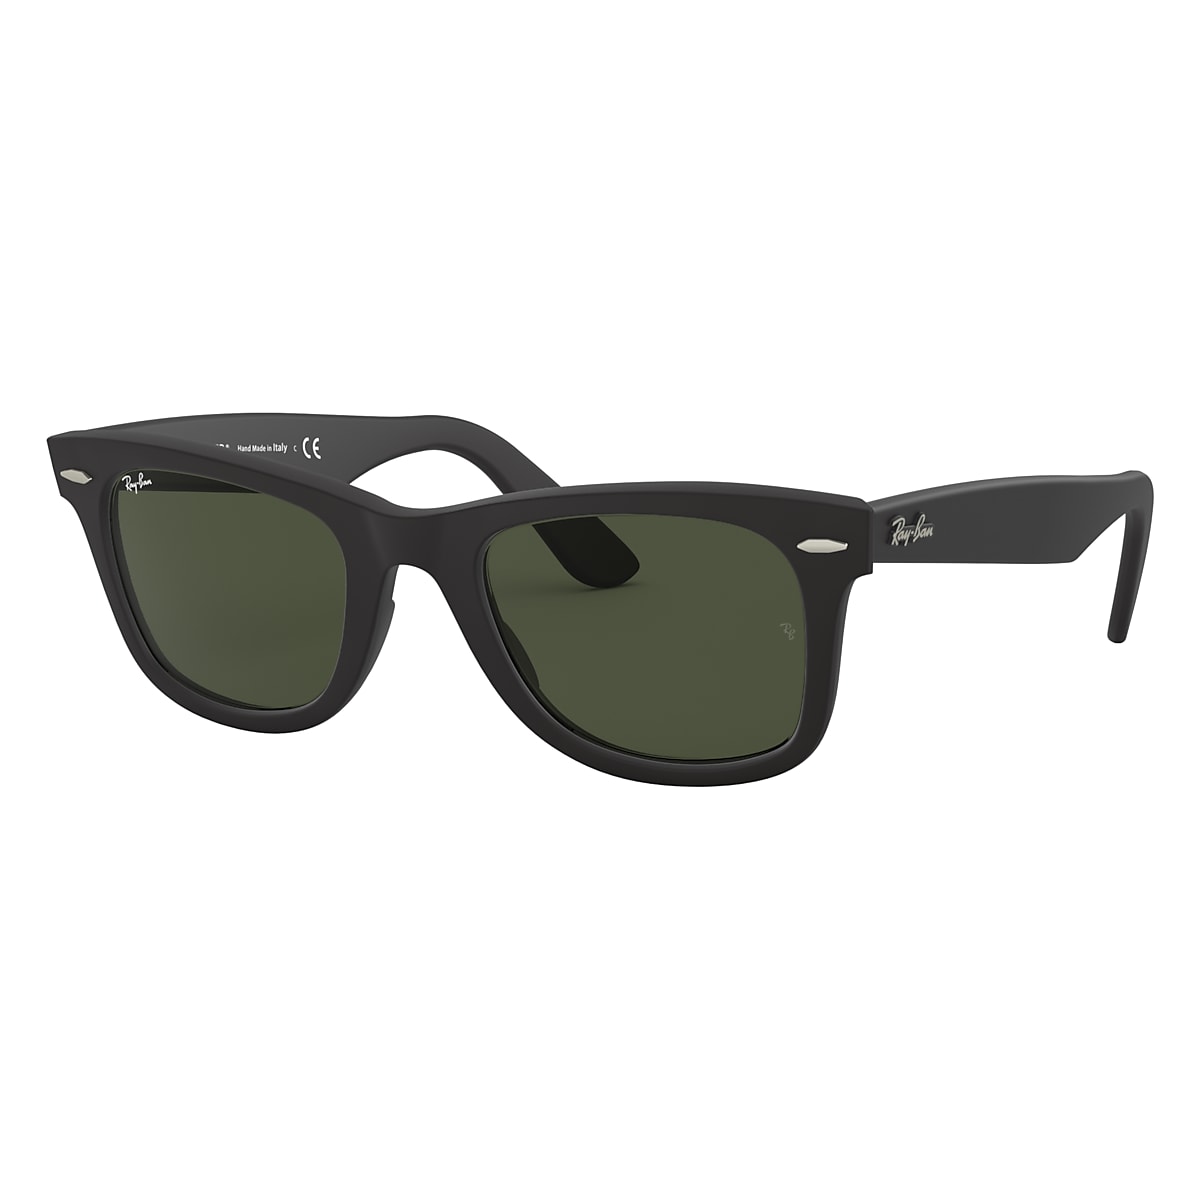 ORIGINAL WAYFARER CLASSIC Sunglasses in Black and Green - RB2140F 